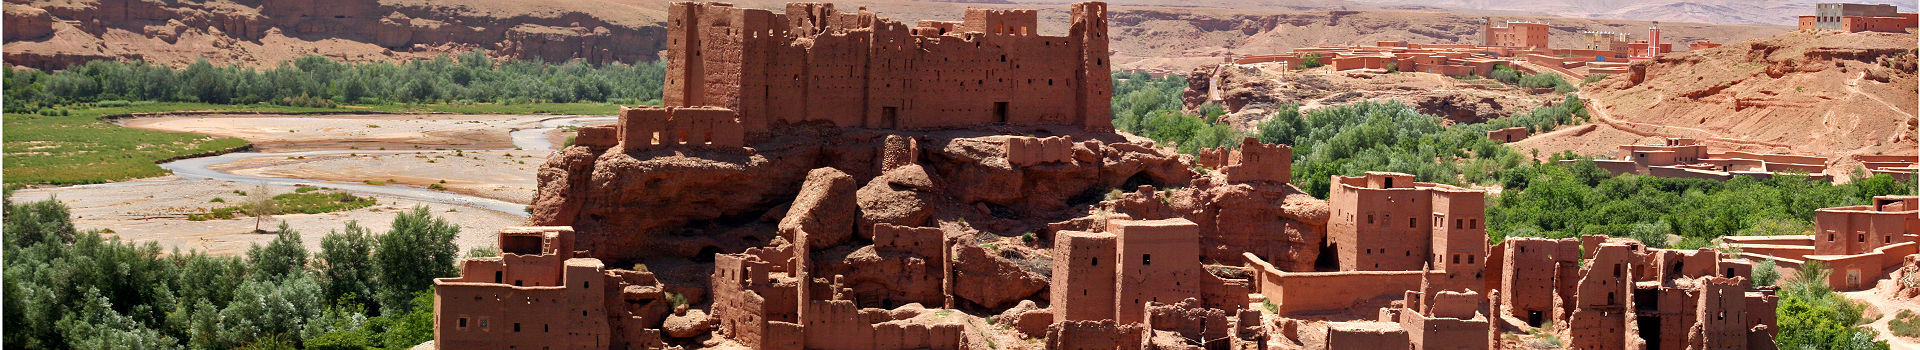 Kasbah du Dades, Maroc